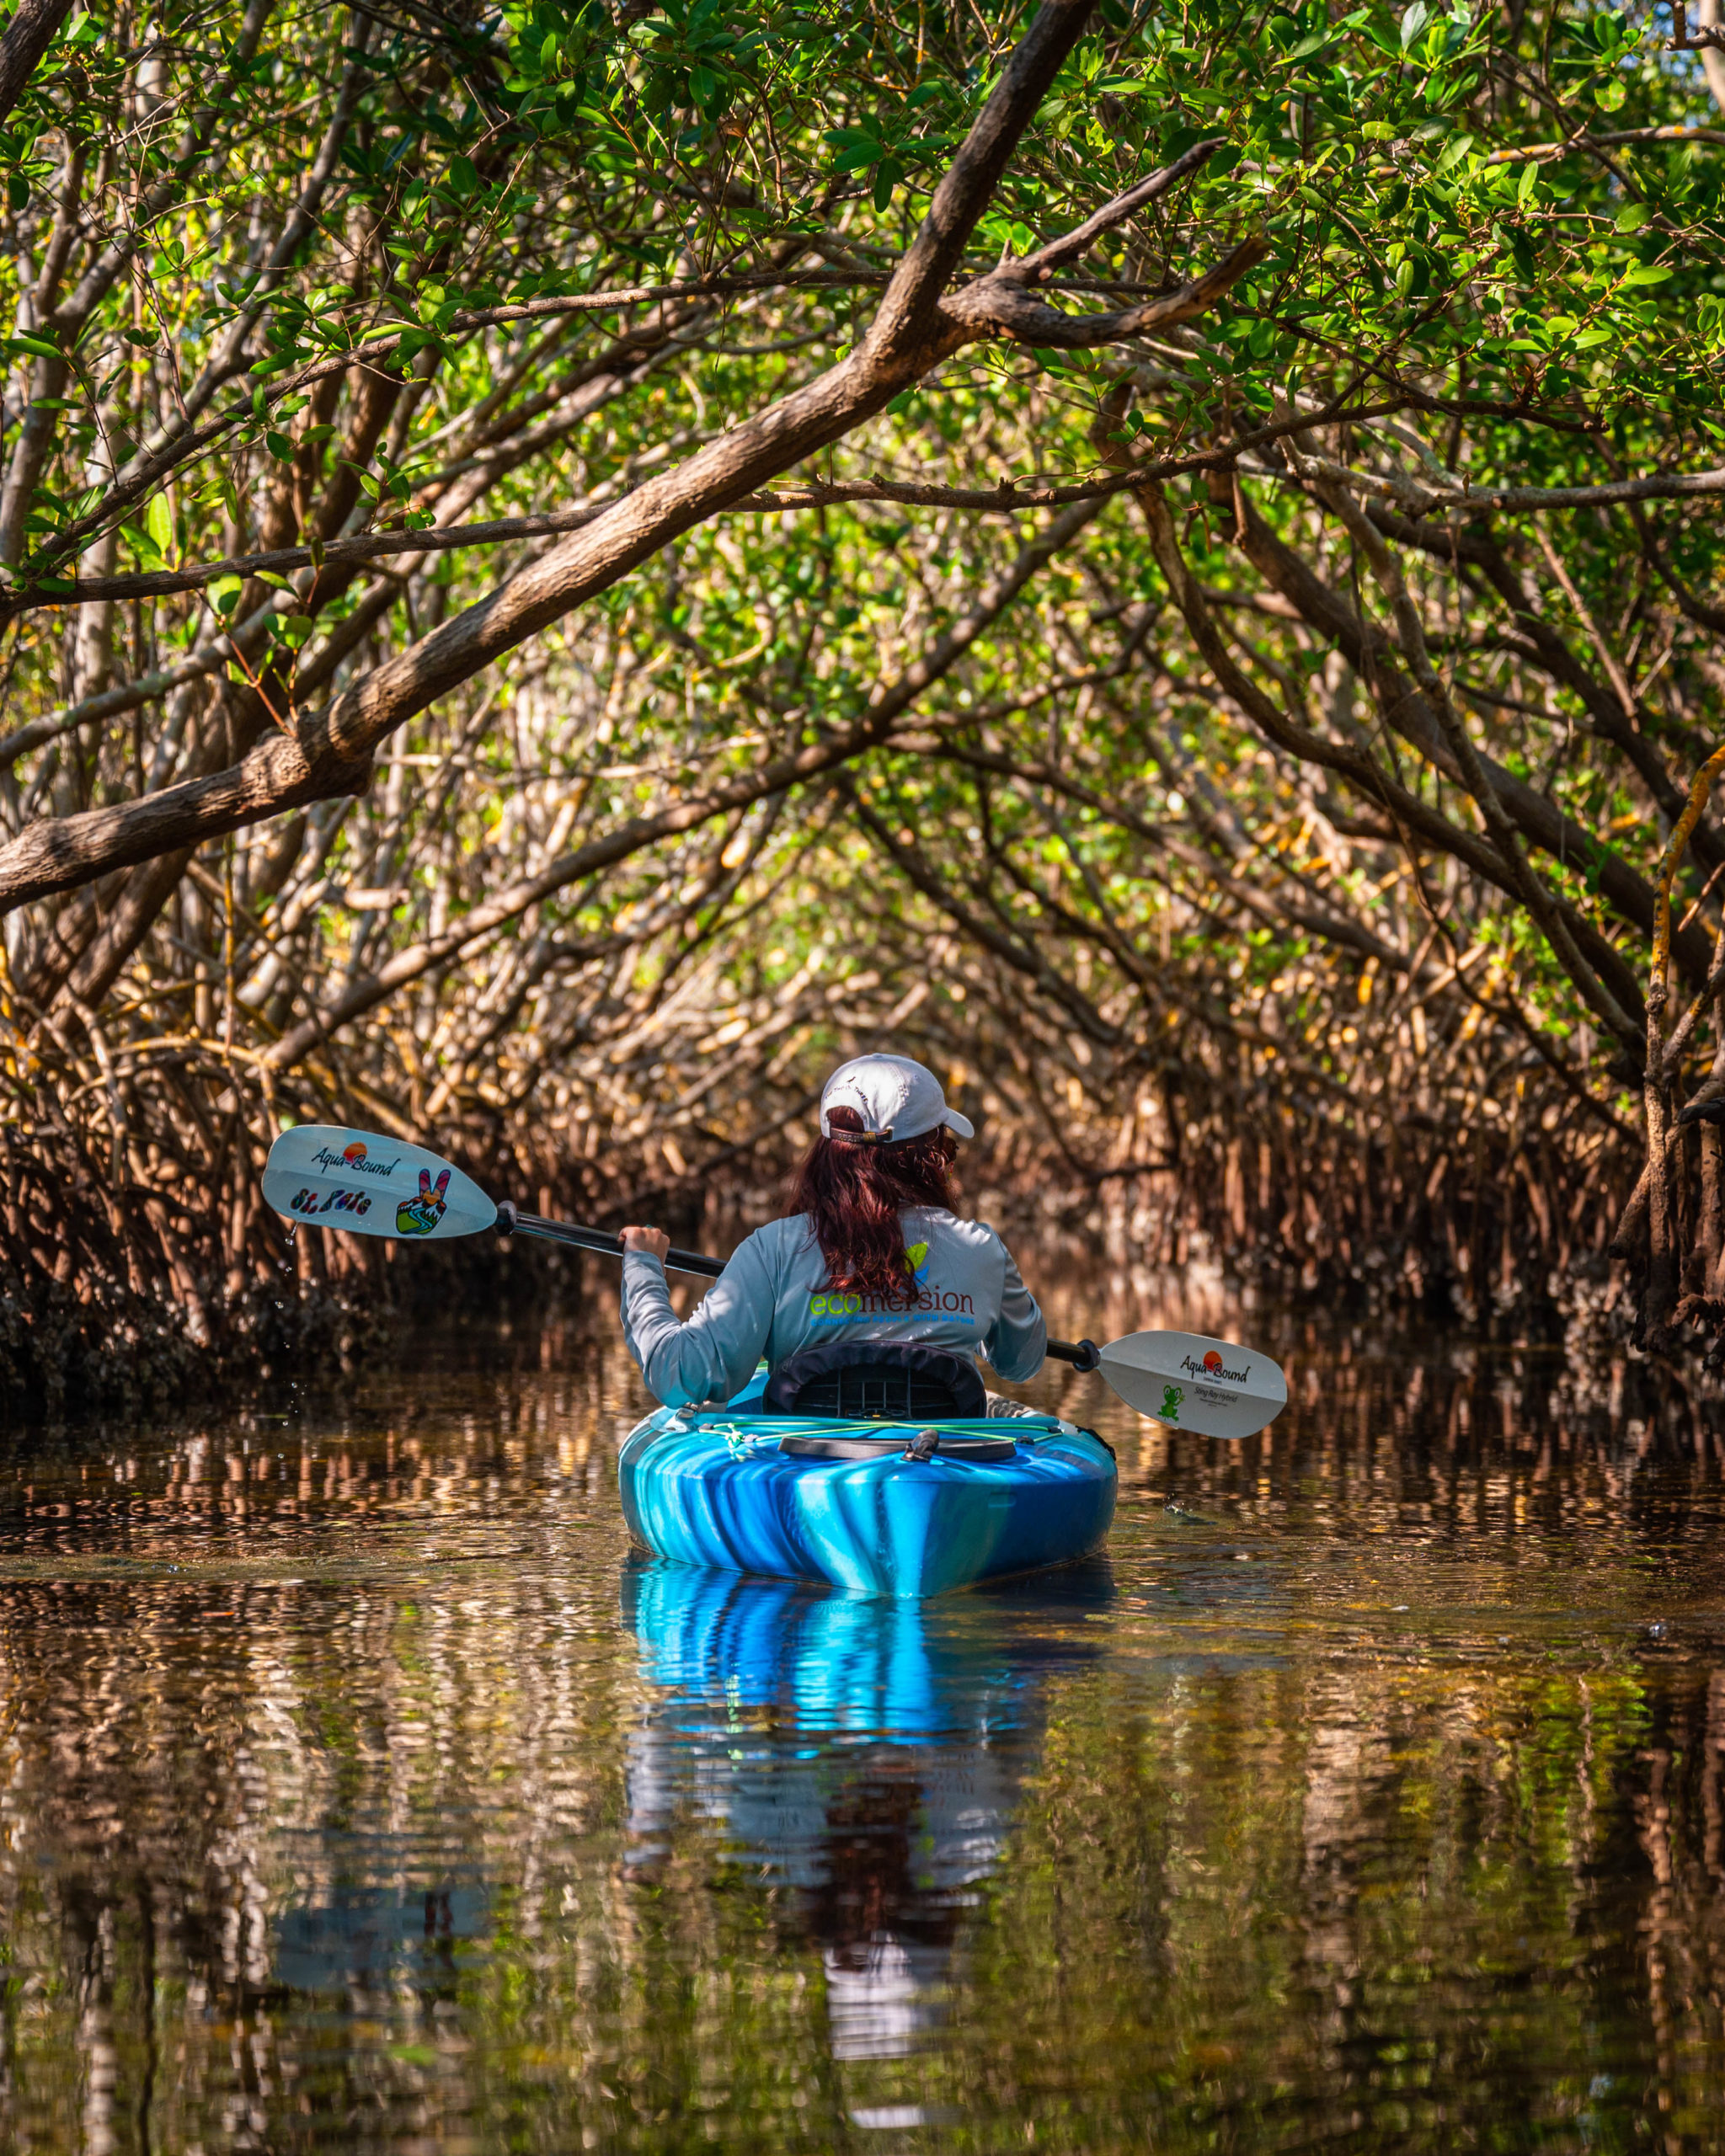 Image of a woman kayaking among mangrove trees.